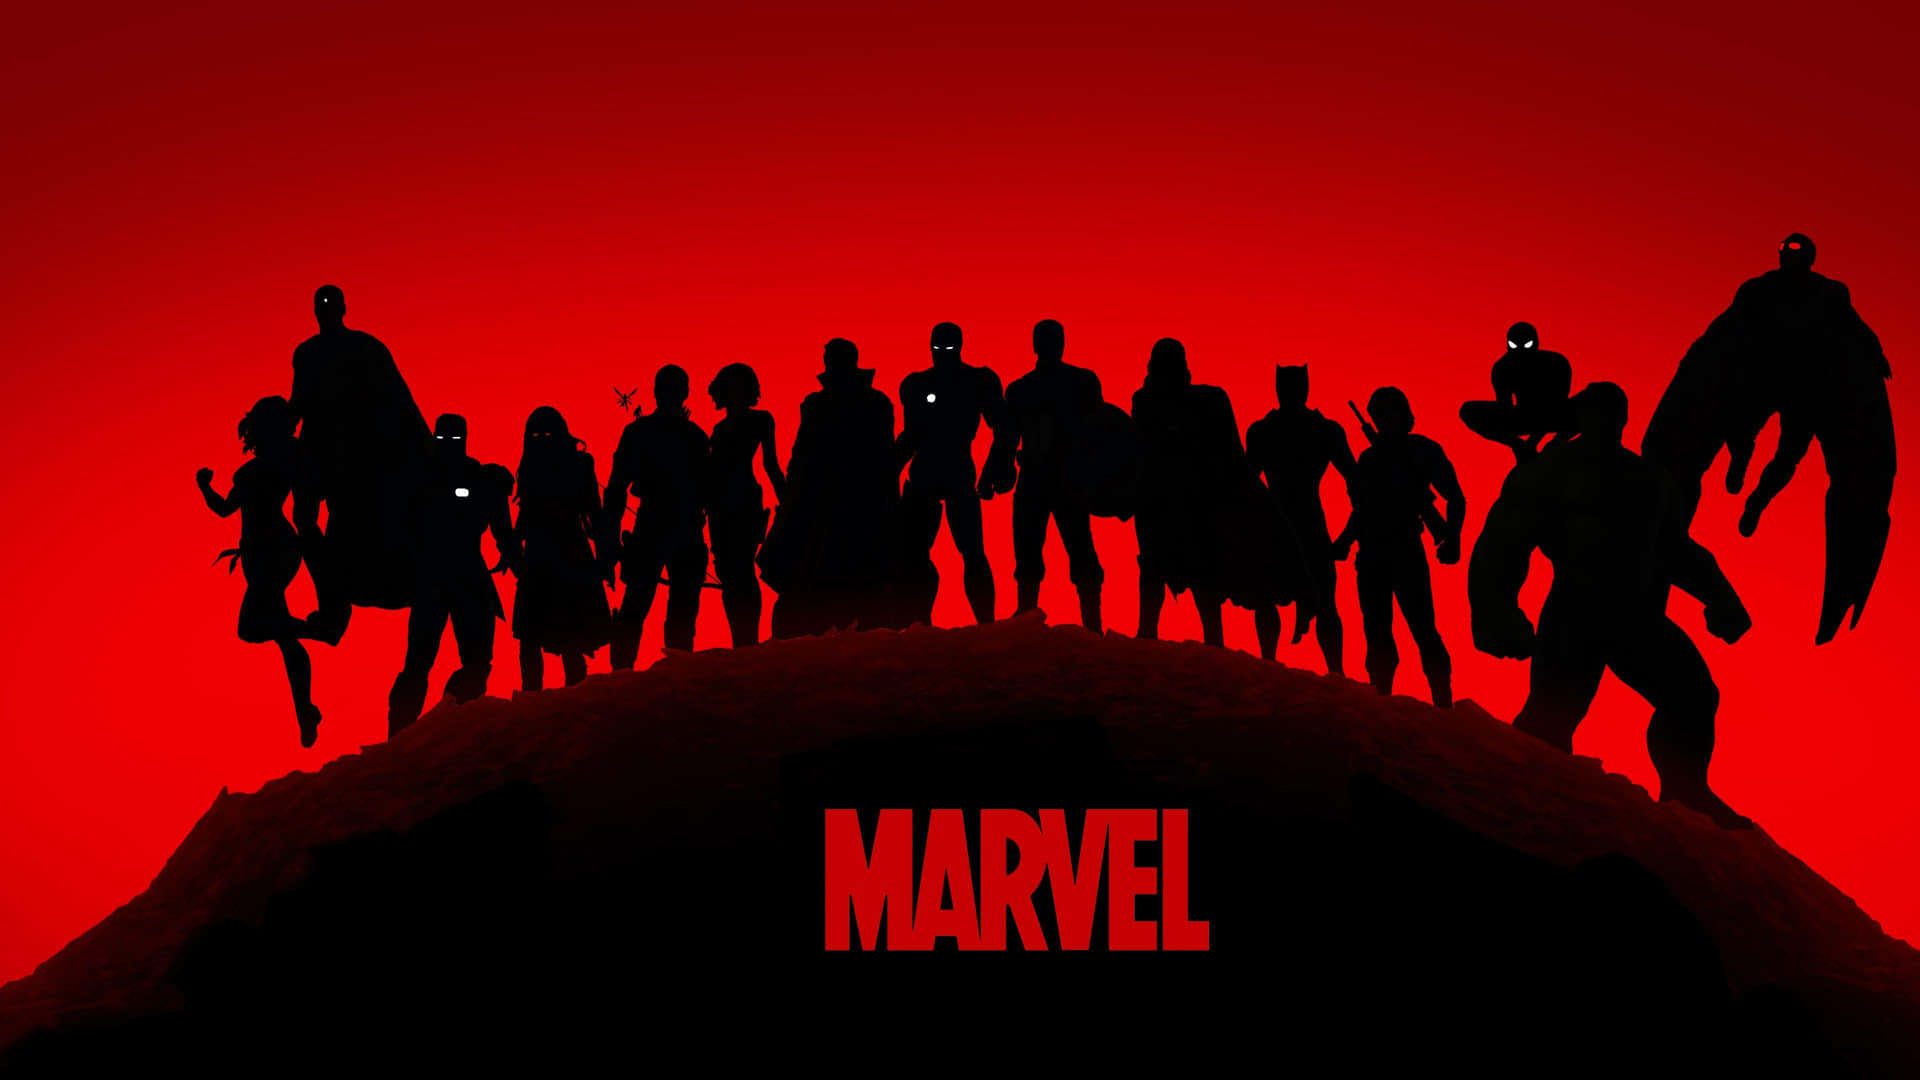 Heróisdo Universo Marvel Se Unem. Papel de Parede